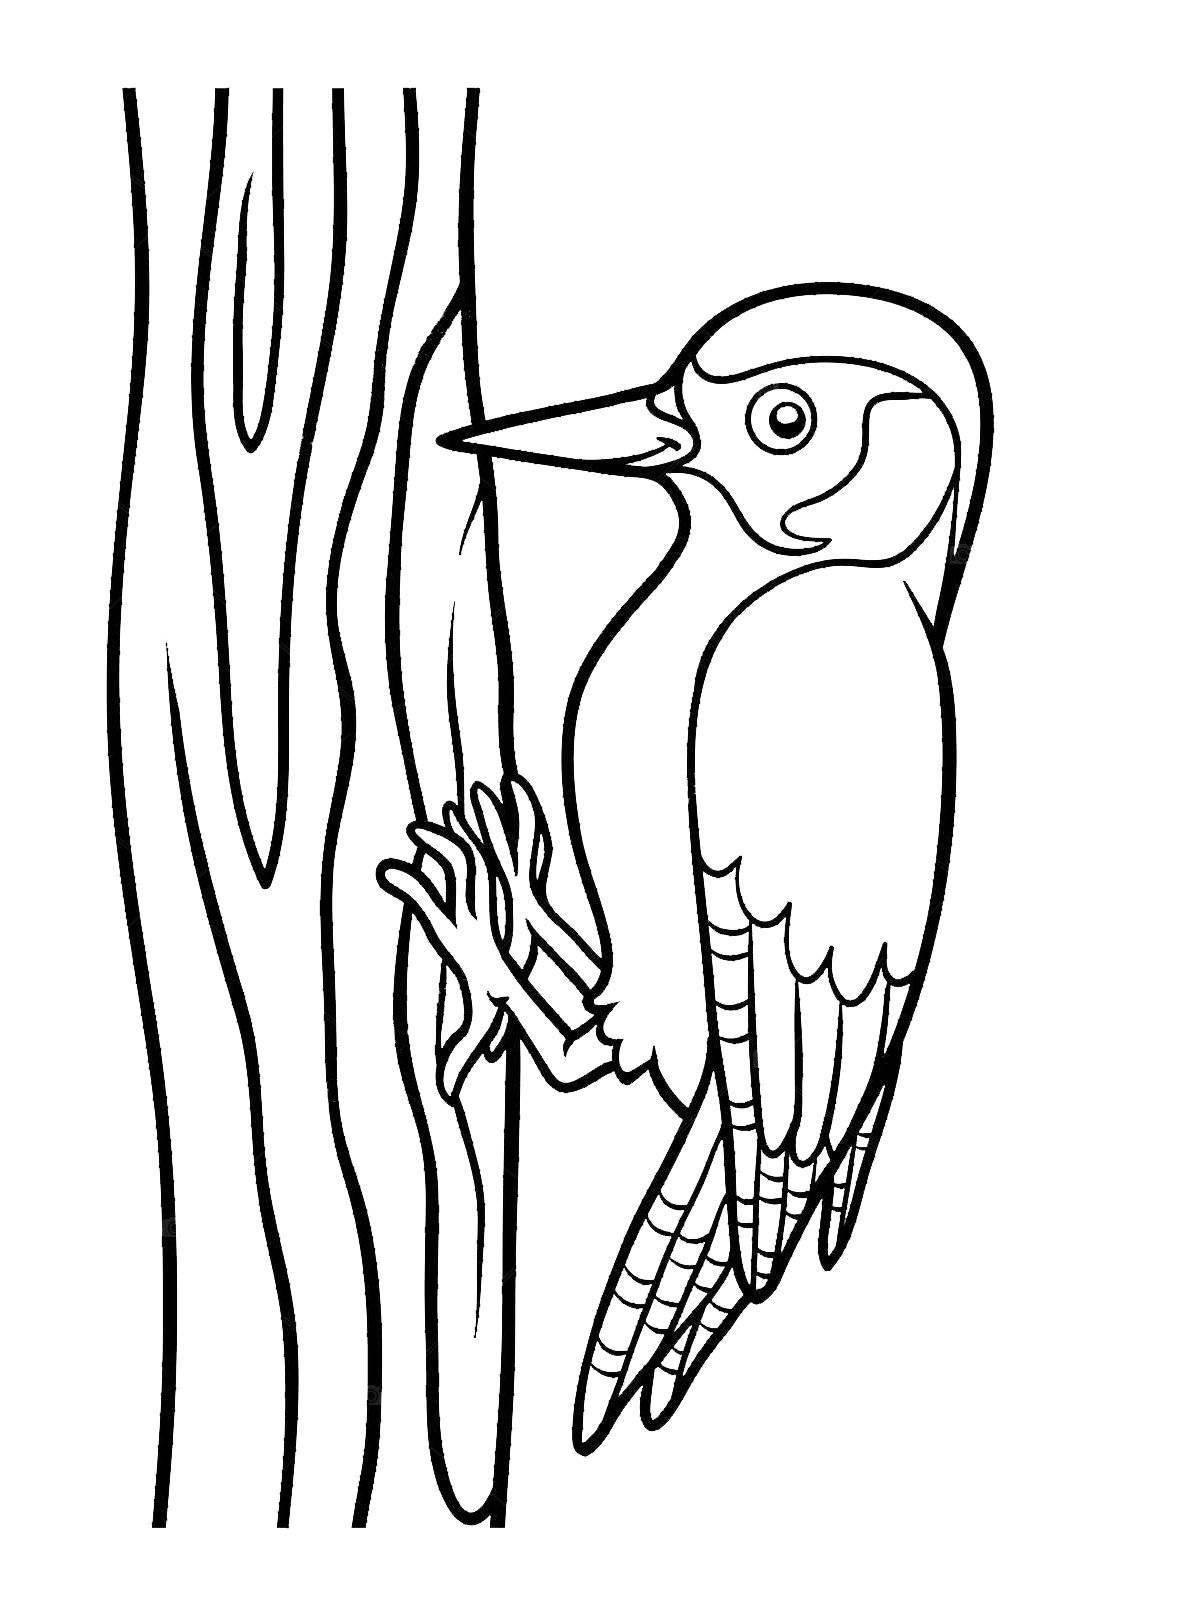 Coloring book shining woodpecker